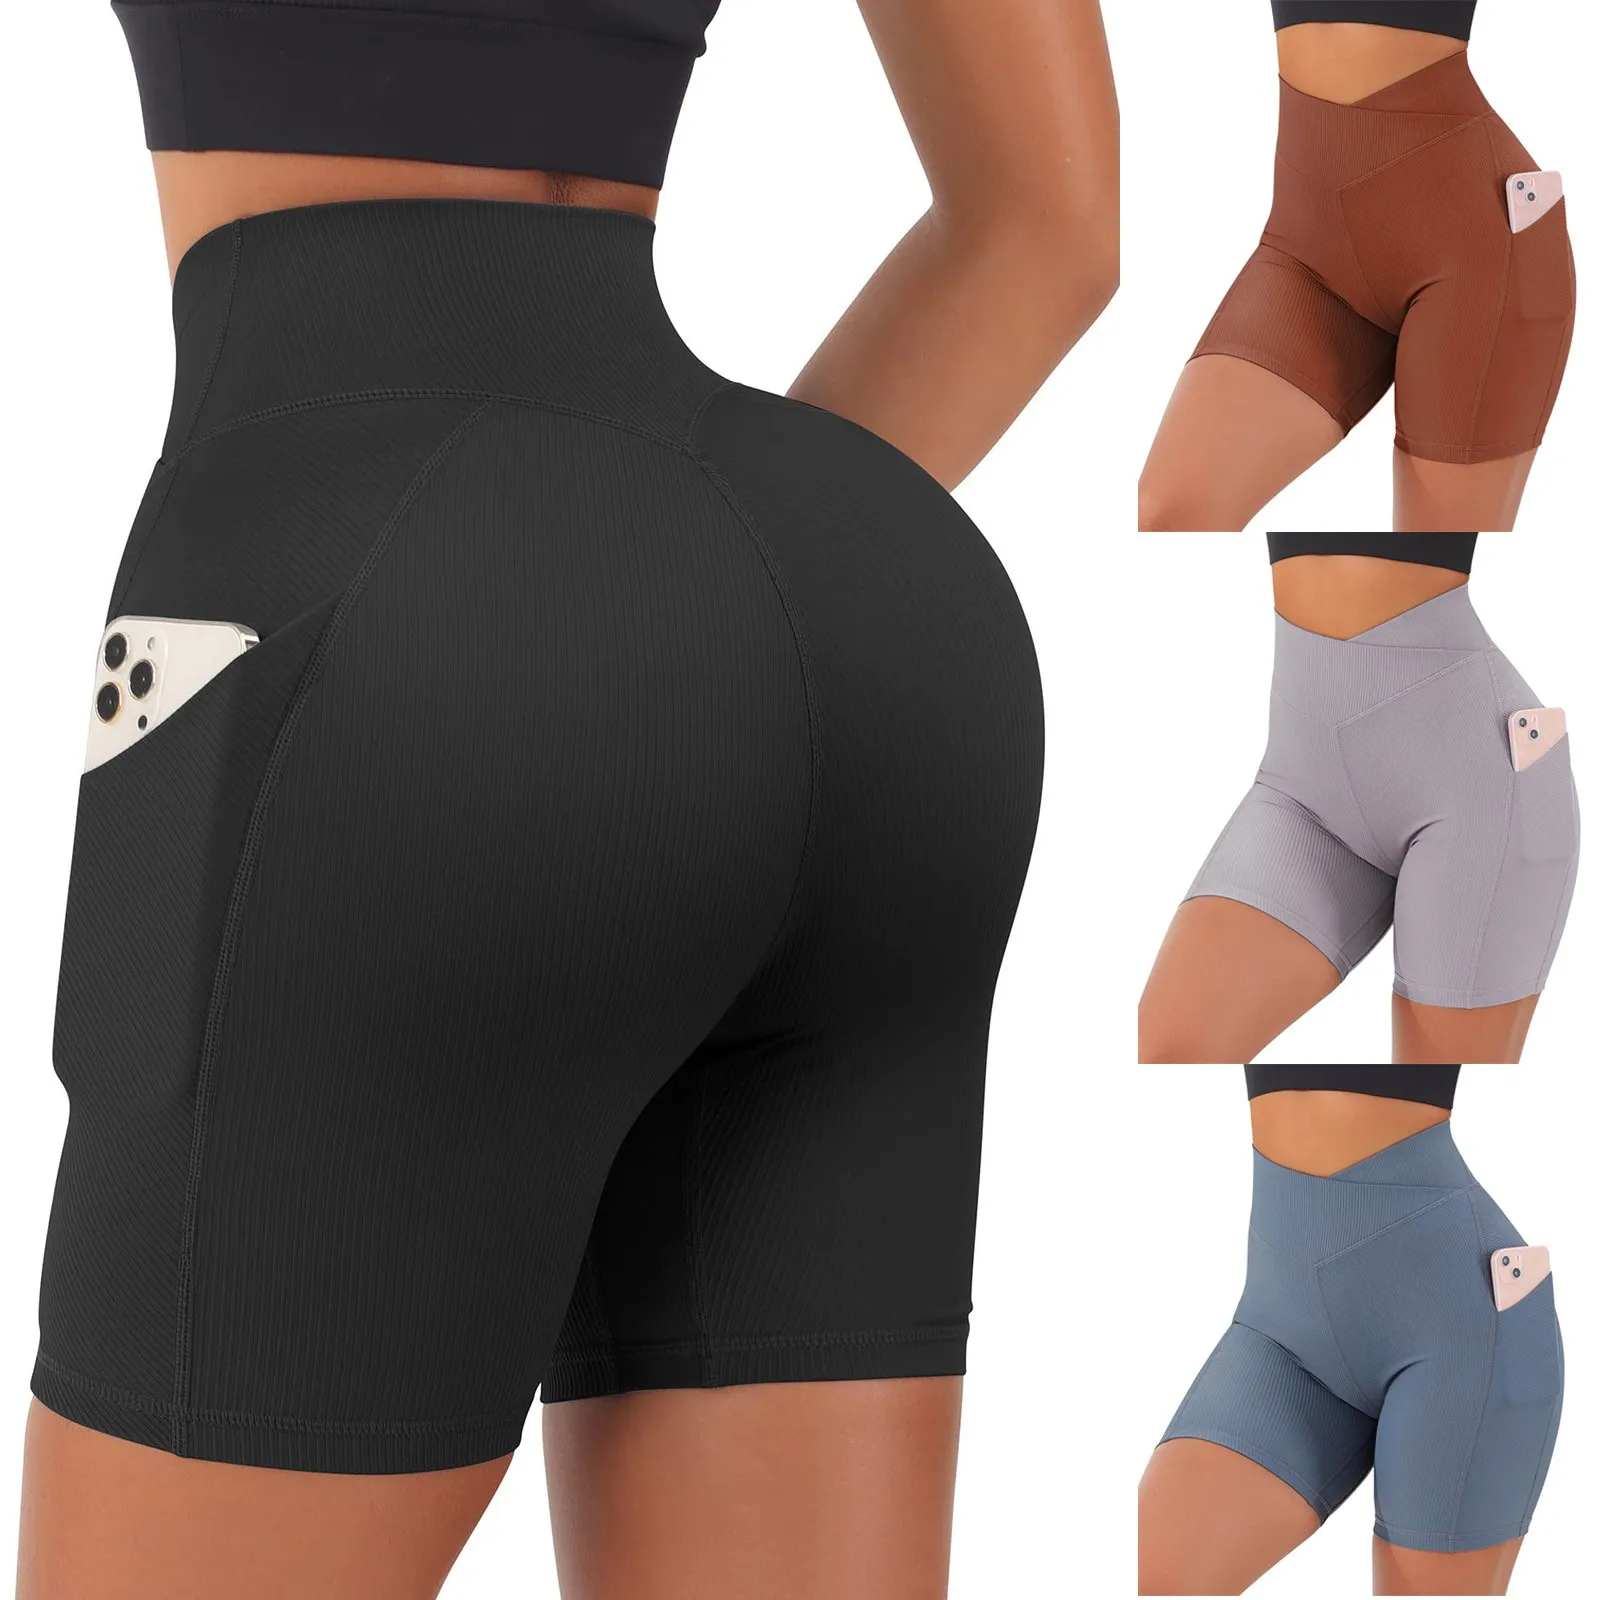 Women Shorts Biker Shorts Fitness Casual Cotton Solid Athleisure Cycling Shorts Clothing High Waist Shorts Pantalones #T2G